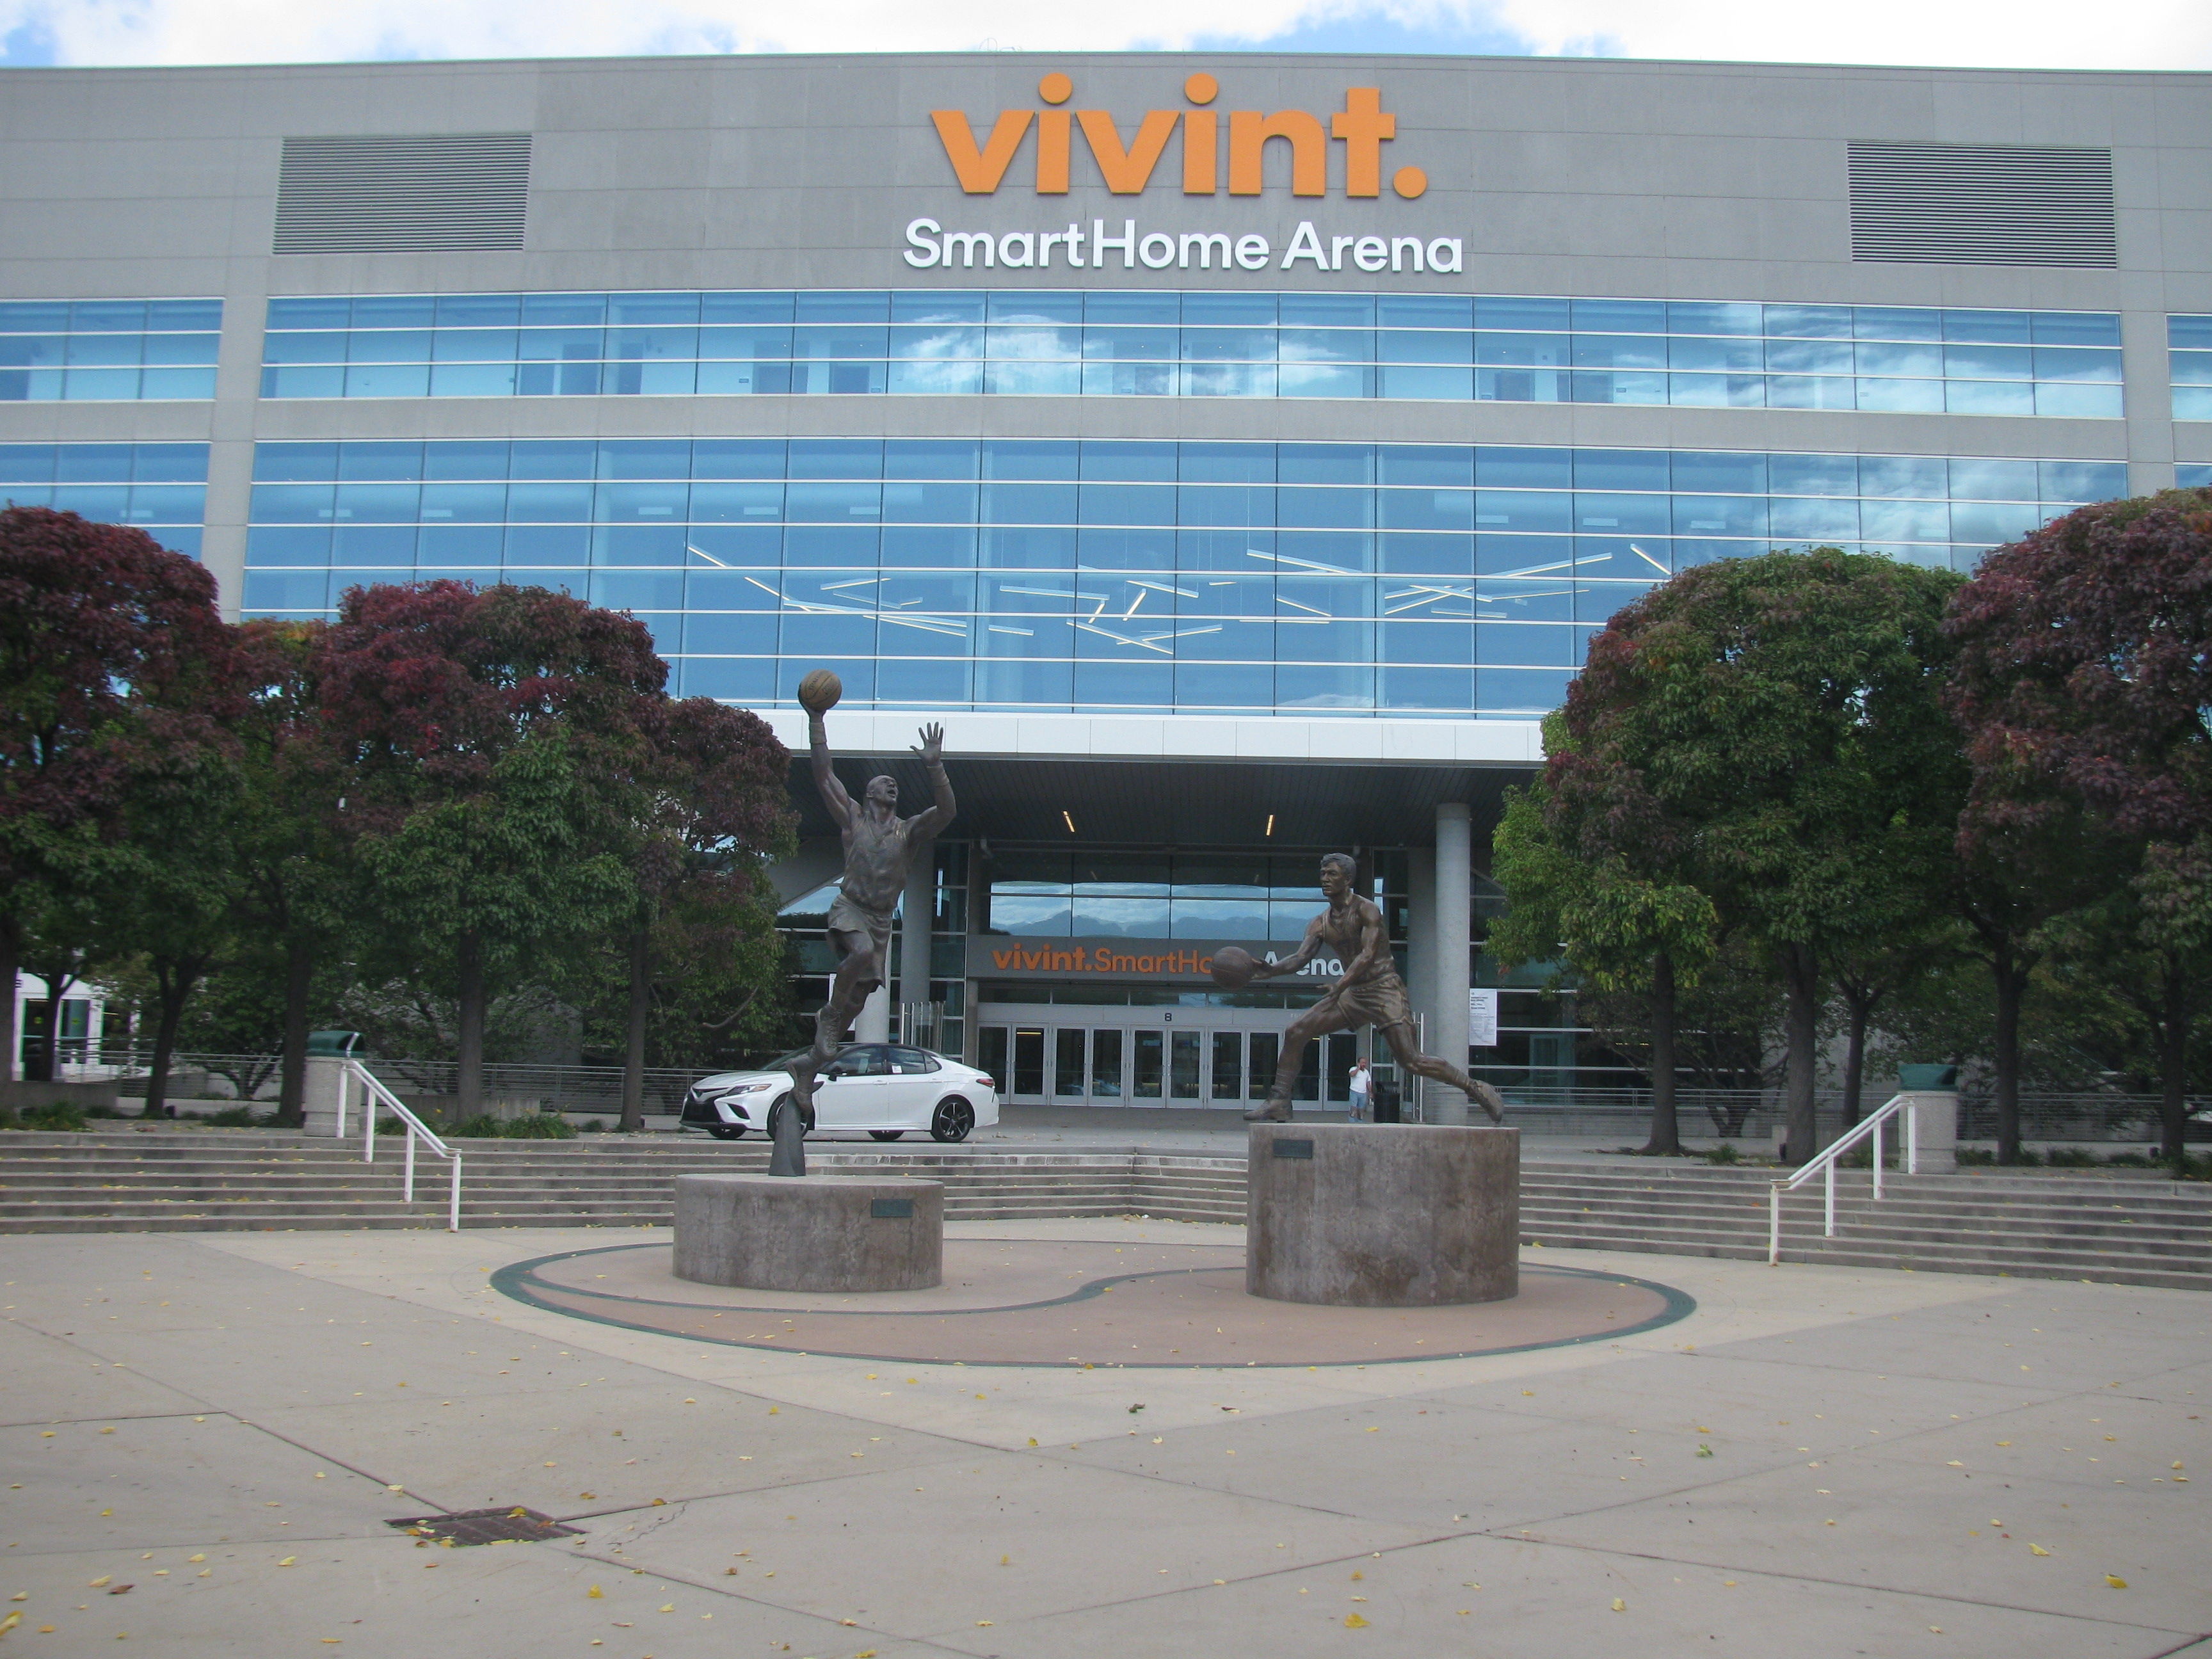 File:Vivint Smart Home Arena, Salt Lake City, Utah.jpg - Wikimedia